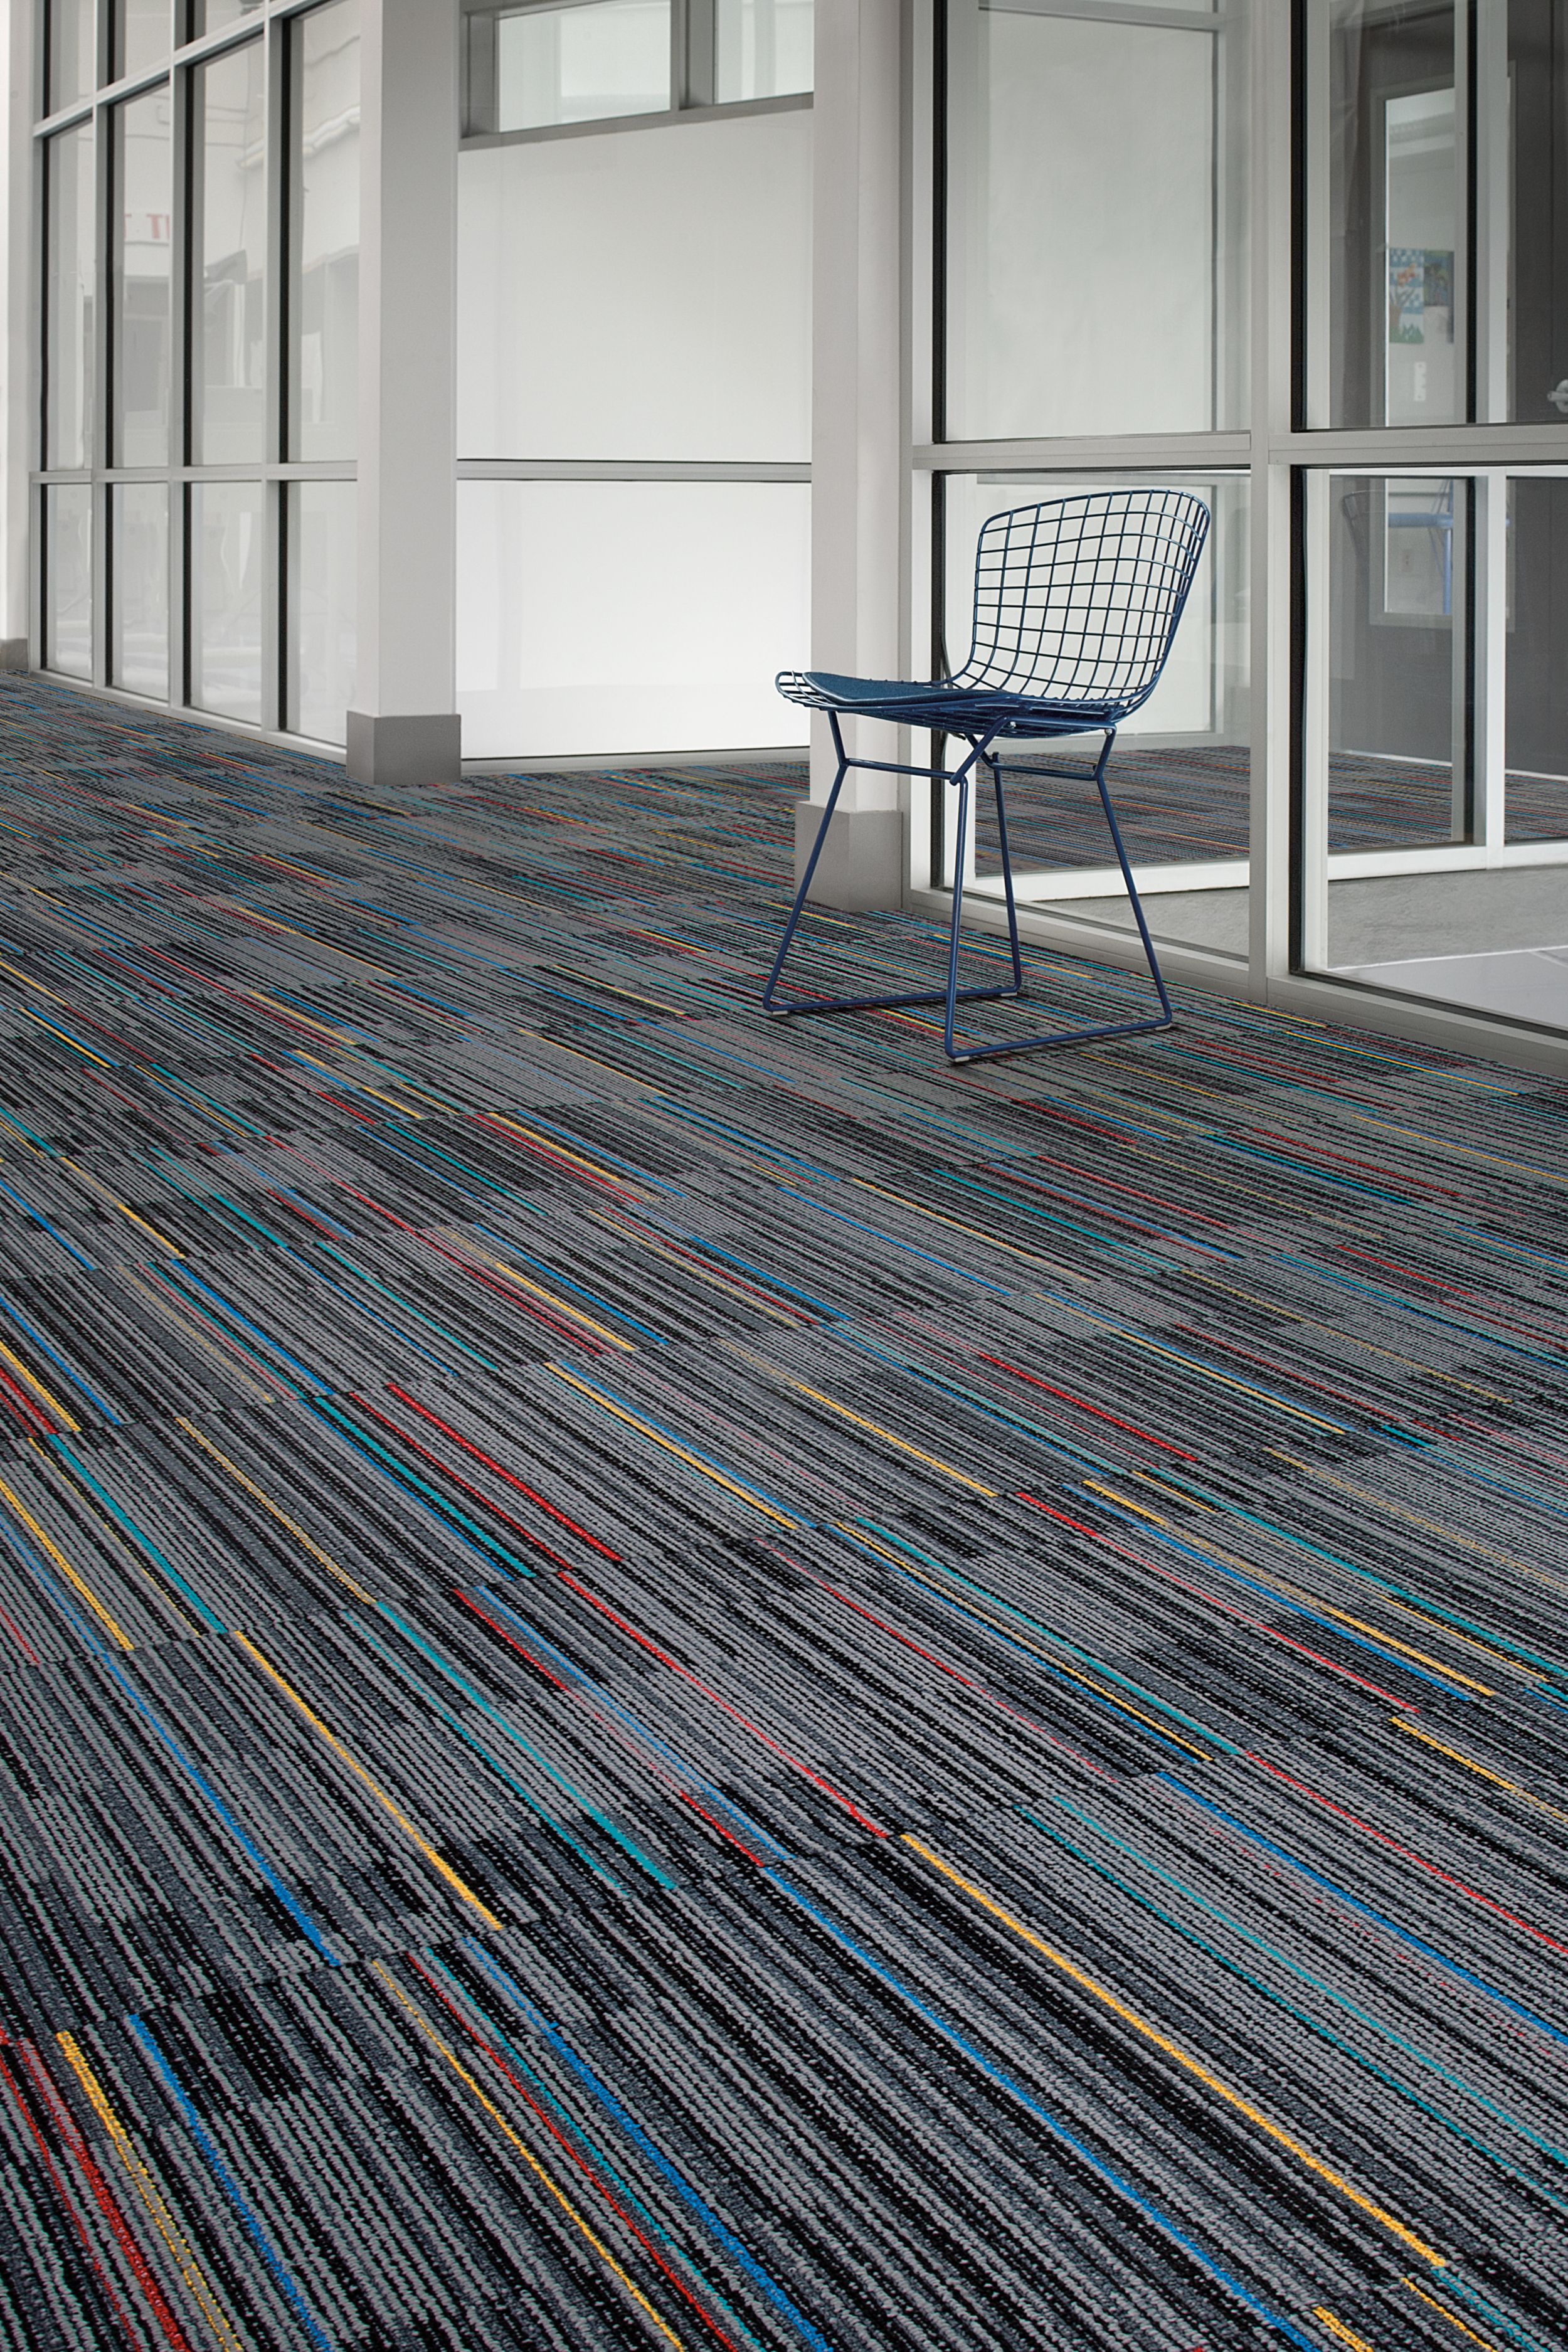 Interface Lima Colores carpet tile  in open corridor with single chair numéro d’image 1